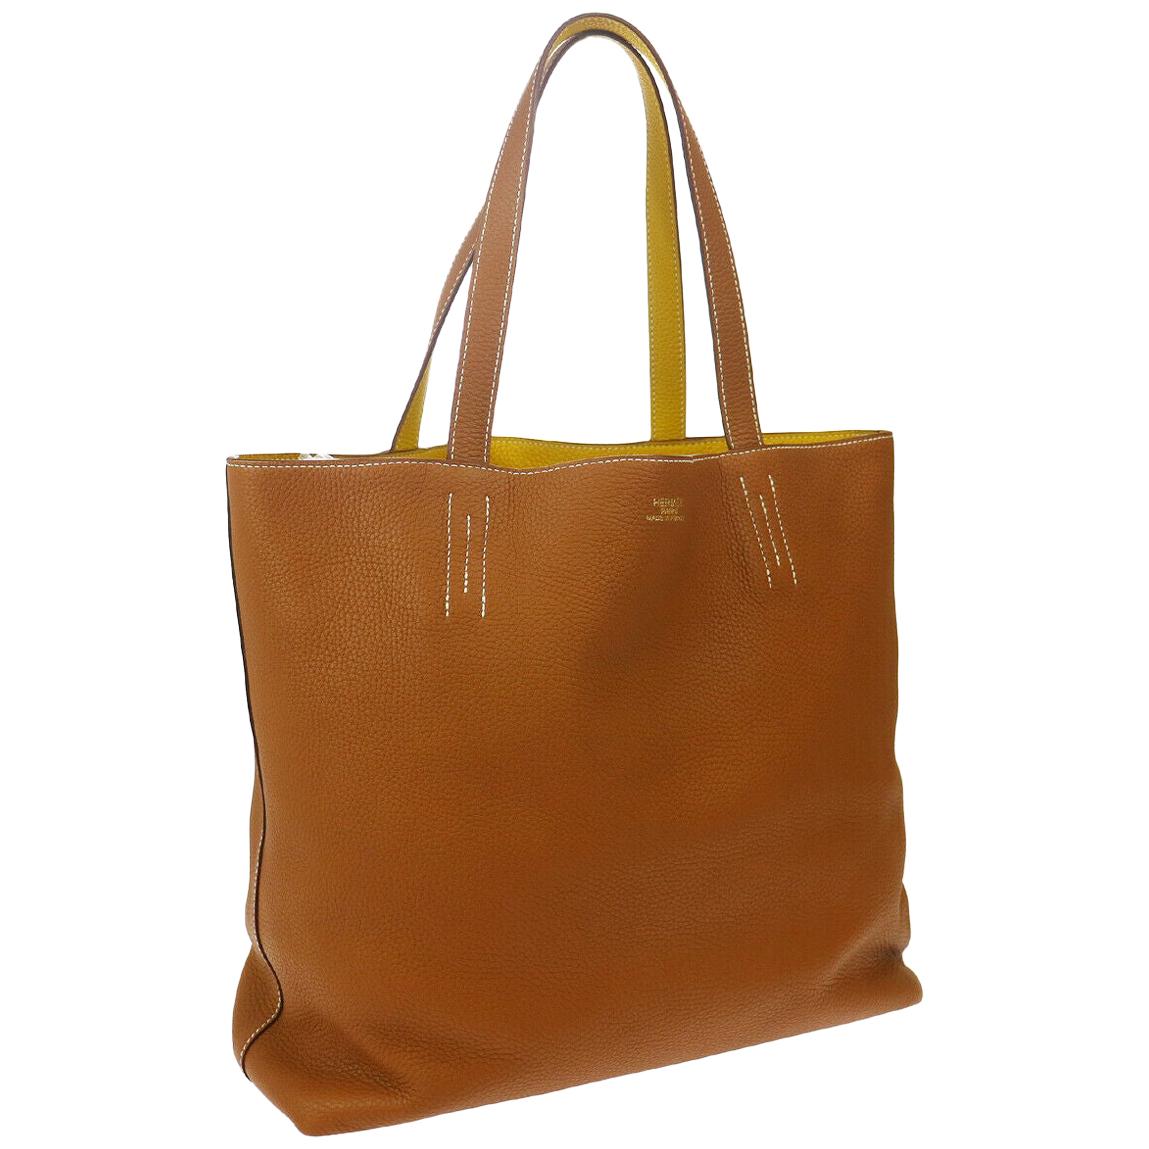  Hermes Cognac Yellow Leather Reversible Carryall Travel Men's Women's Tote Bag